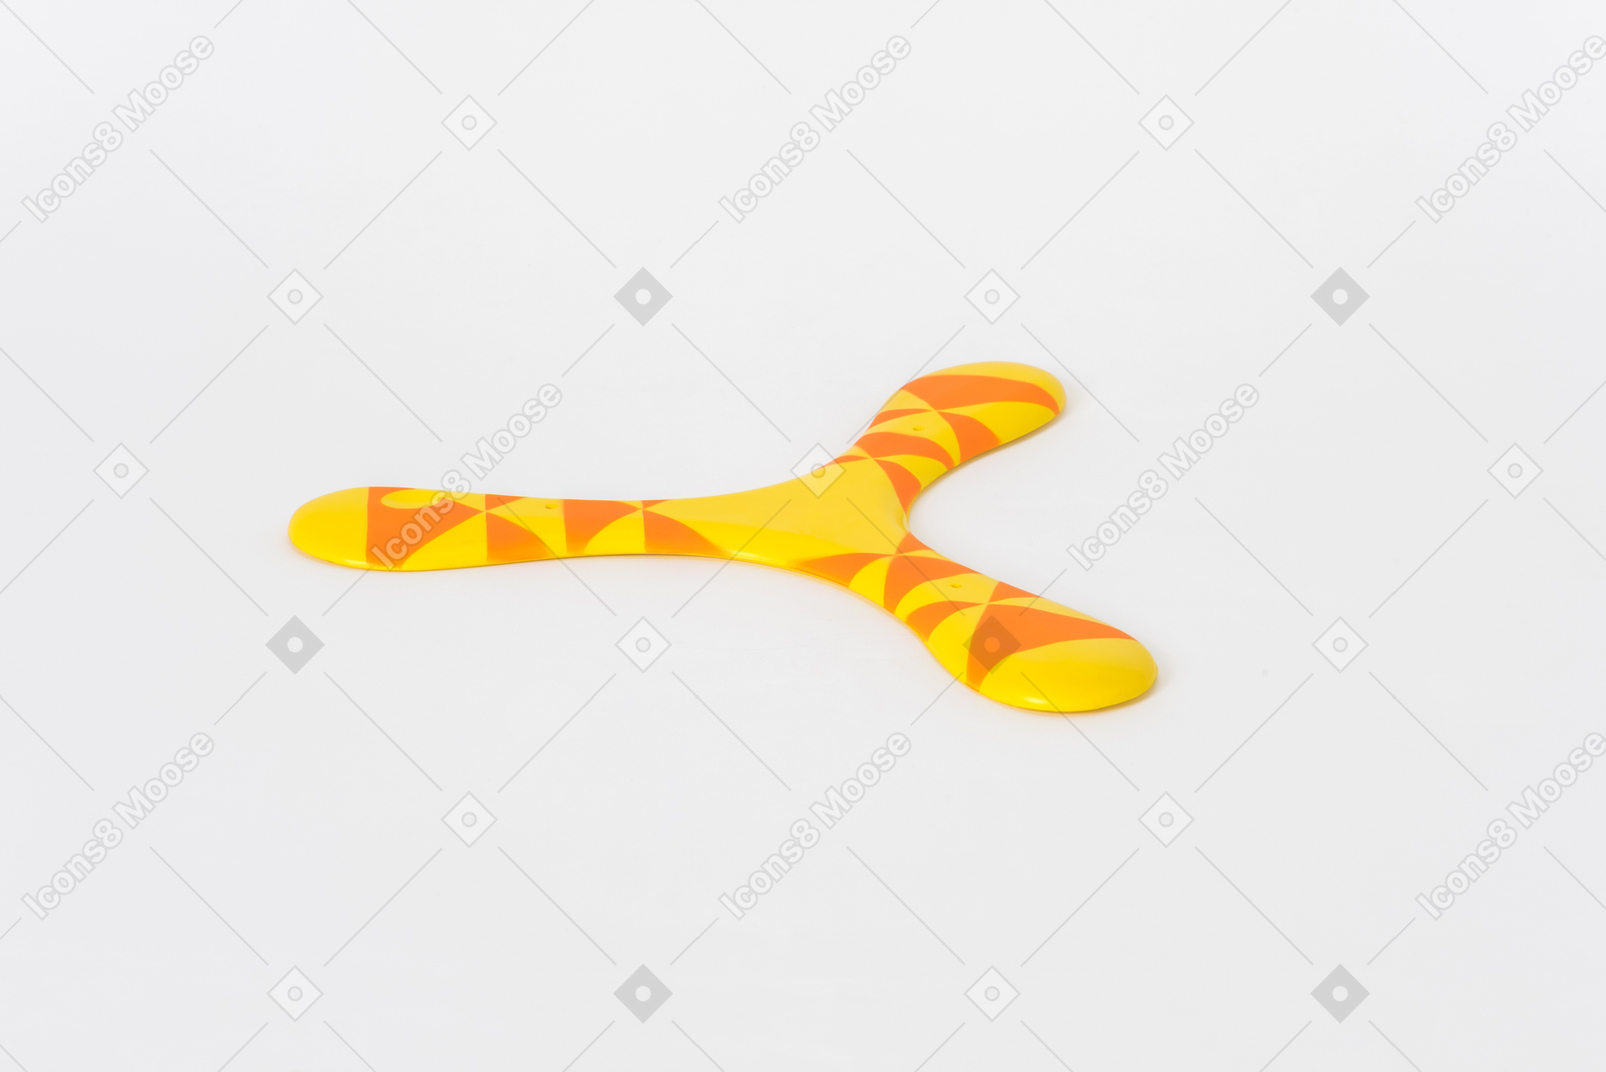 Bumerangue laranja e amarelo sobre fundo branco